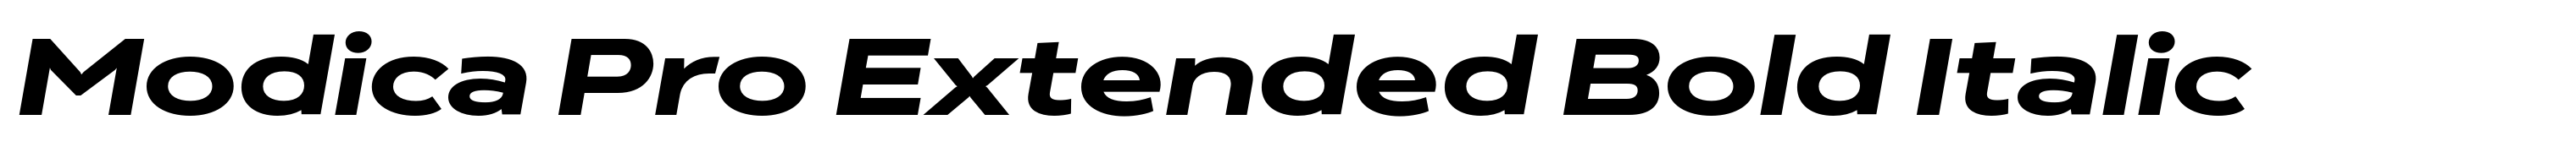 Modica Pro Extended Bold Italic